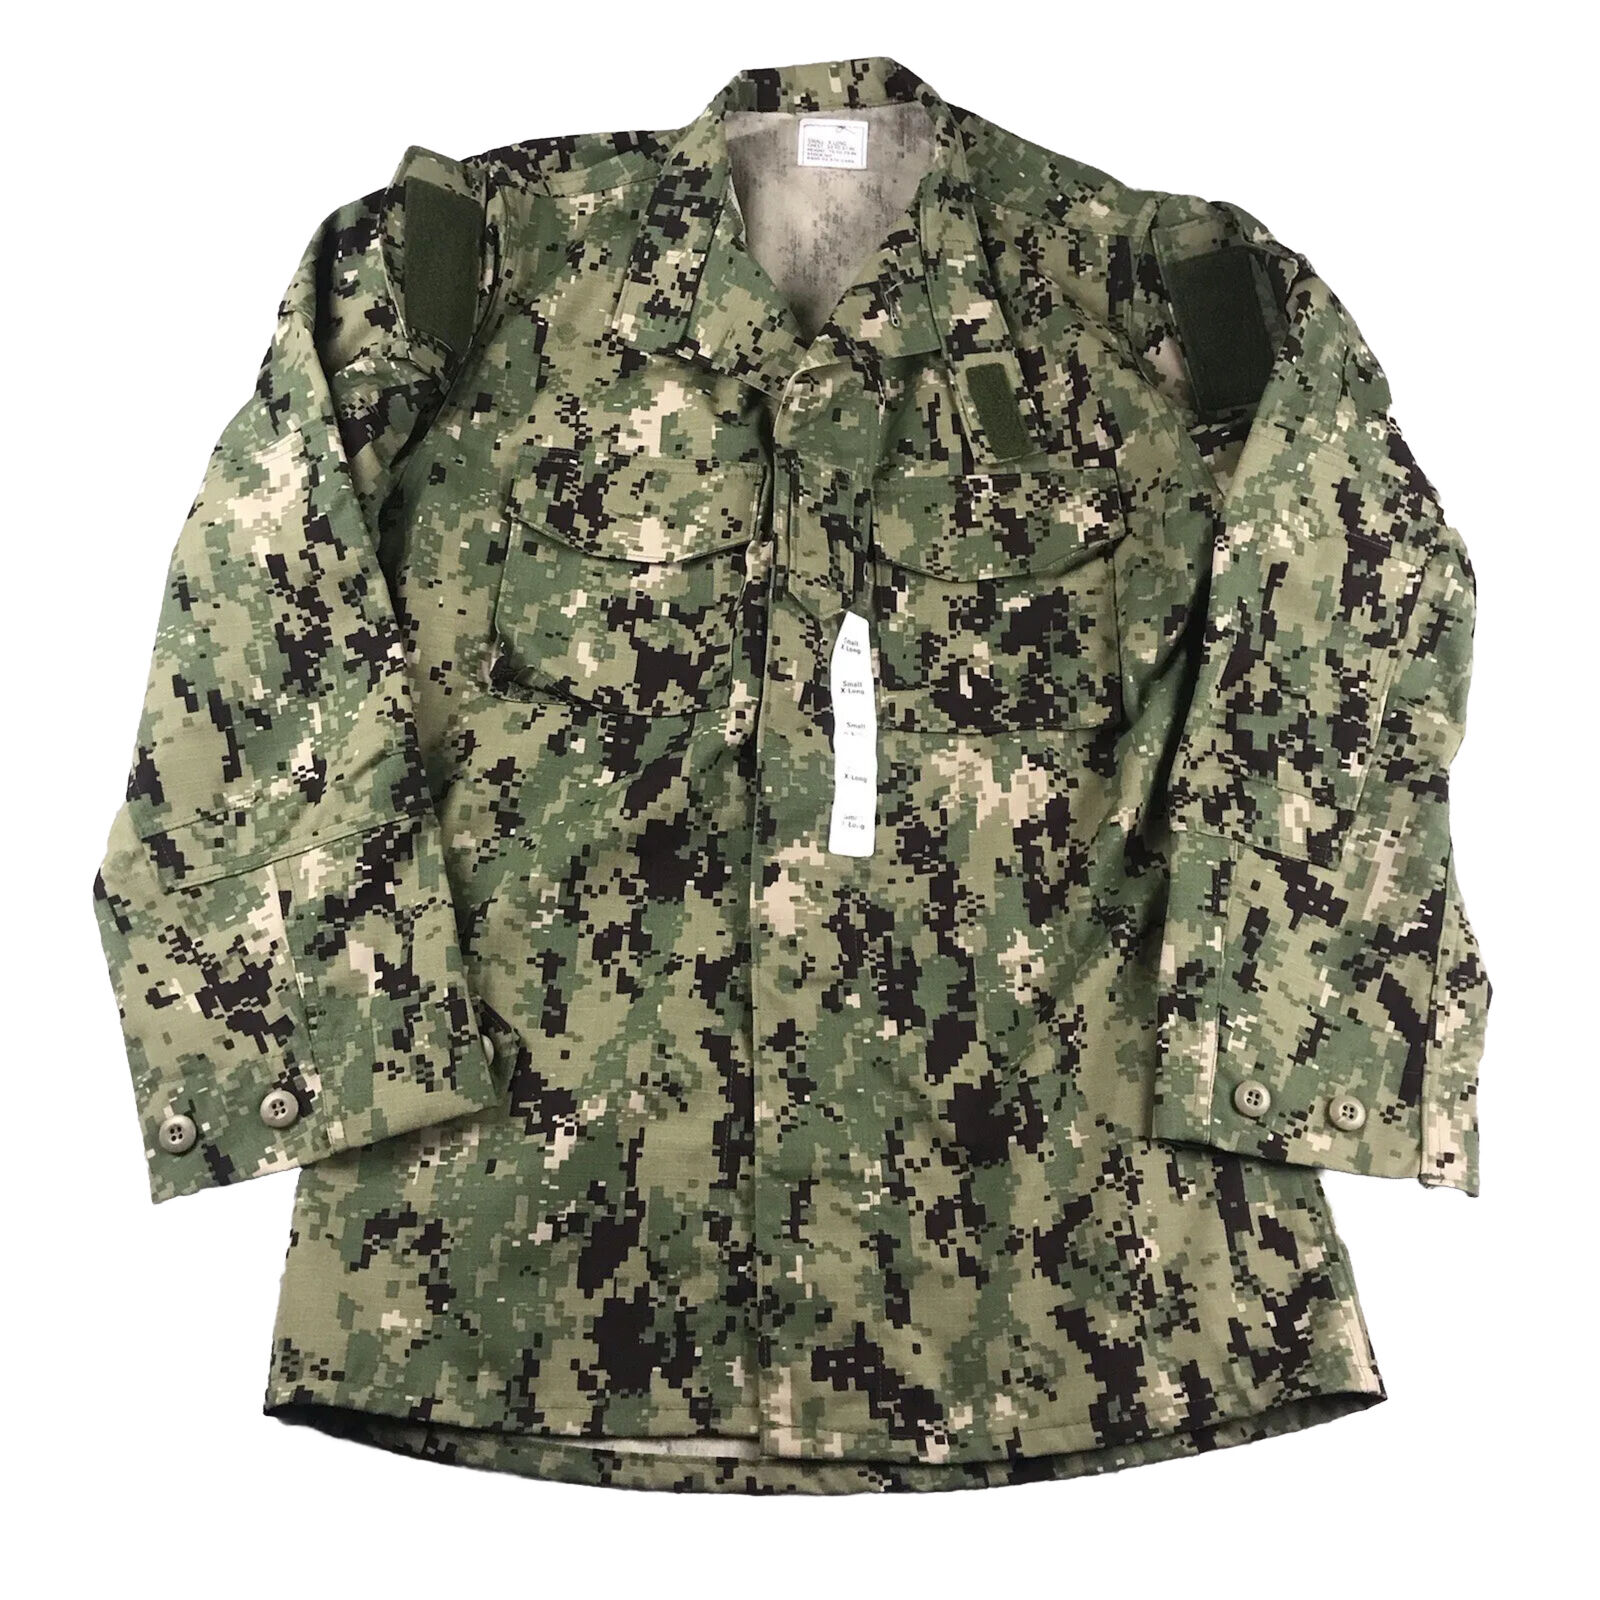 Koman Propper Jacket Womens Small X-Long Green Camo Navy Working Uniform Blouse